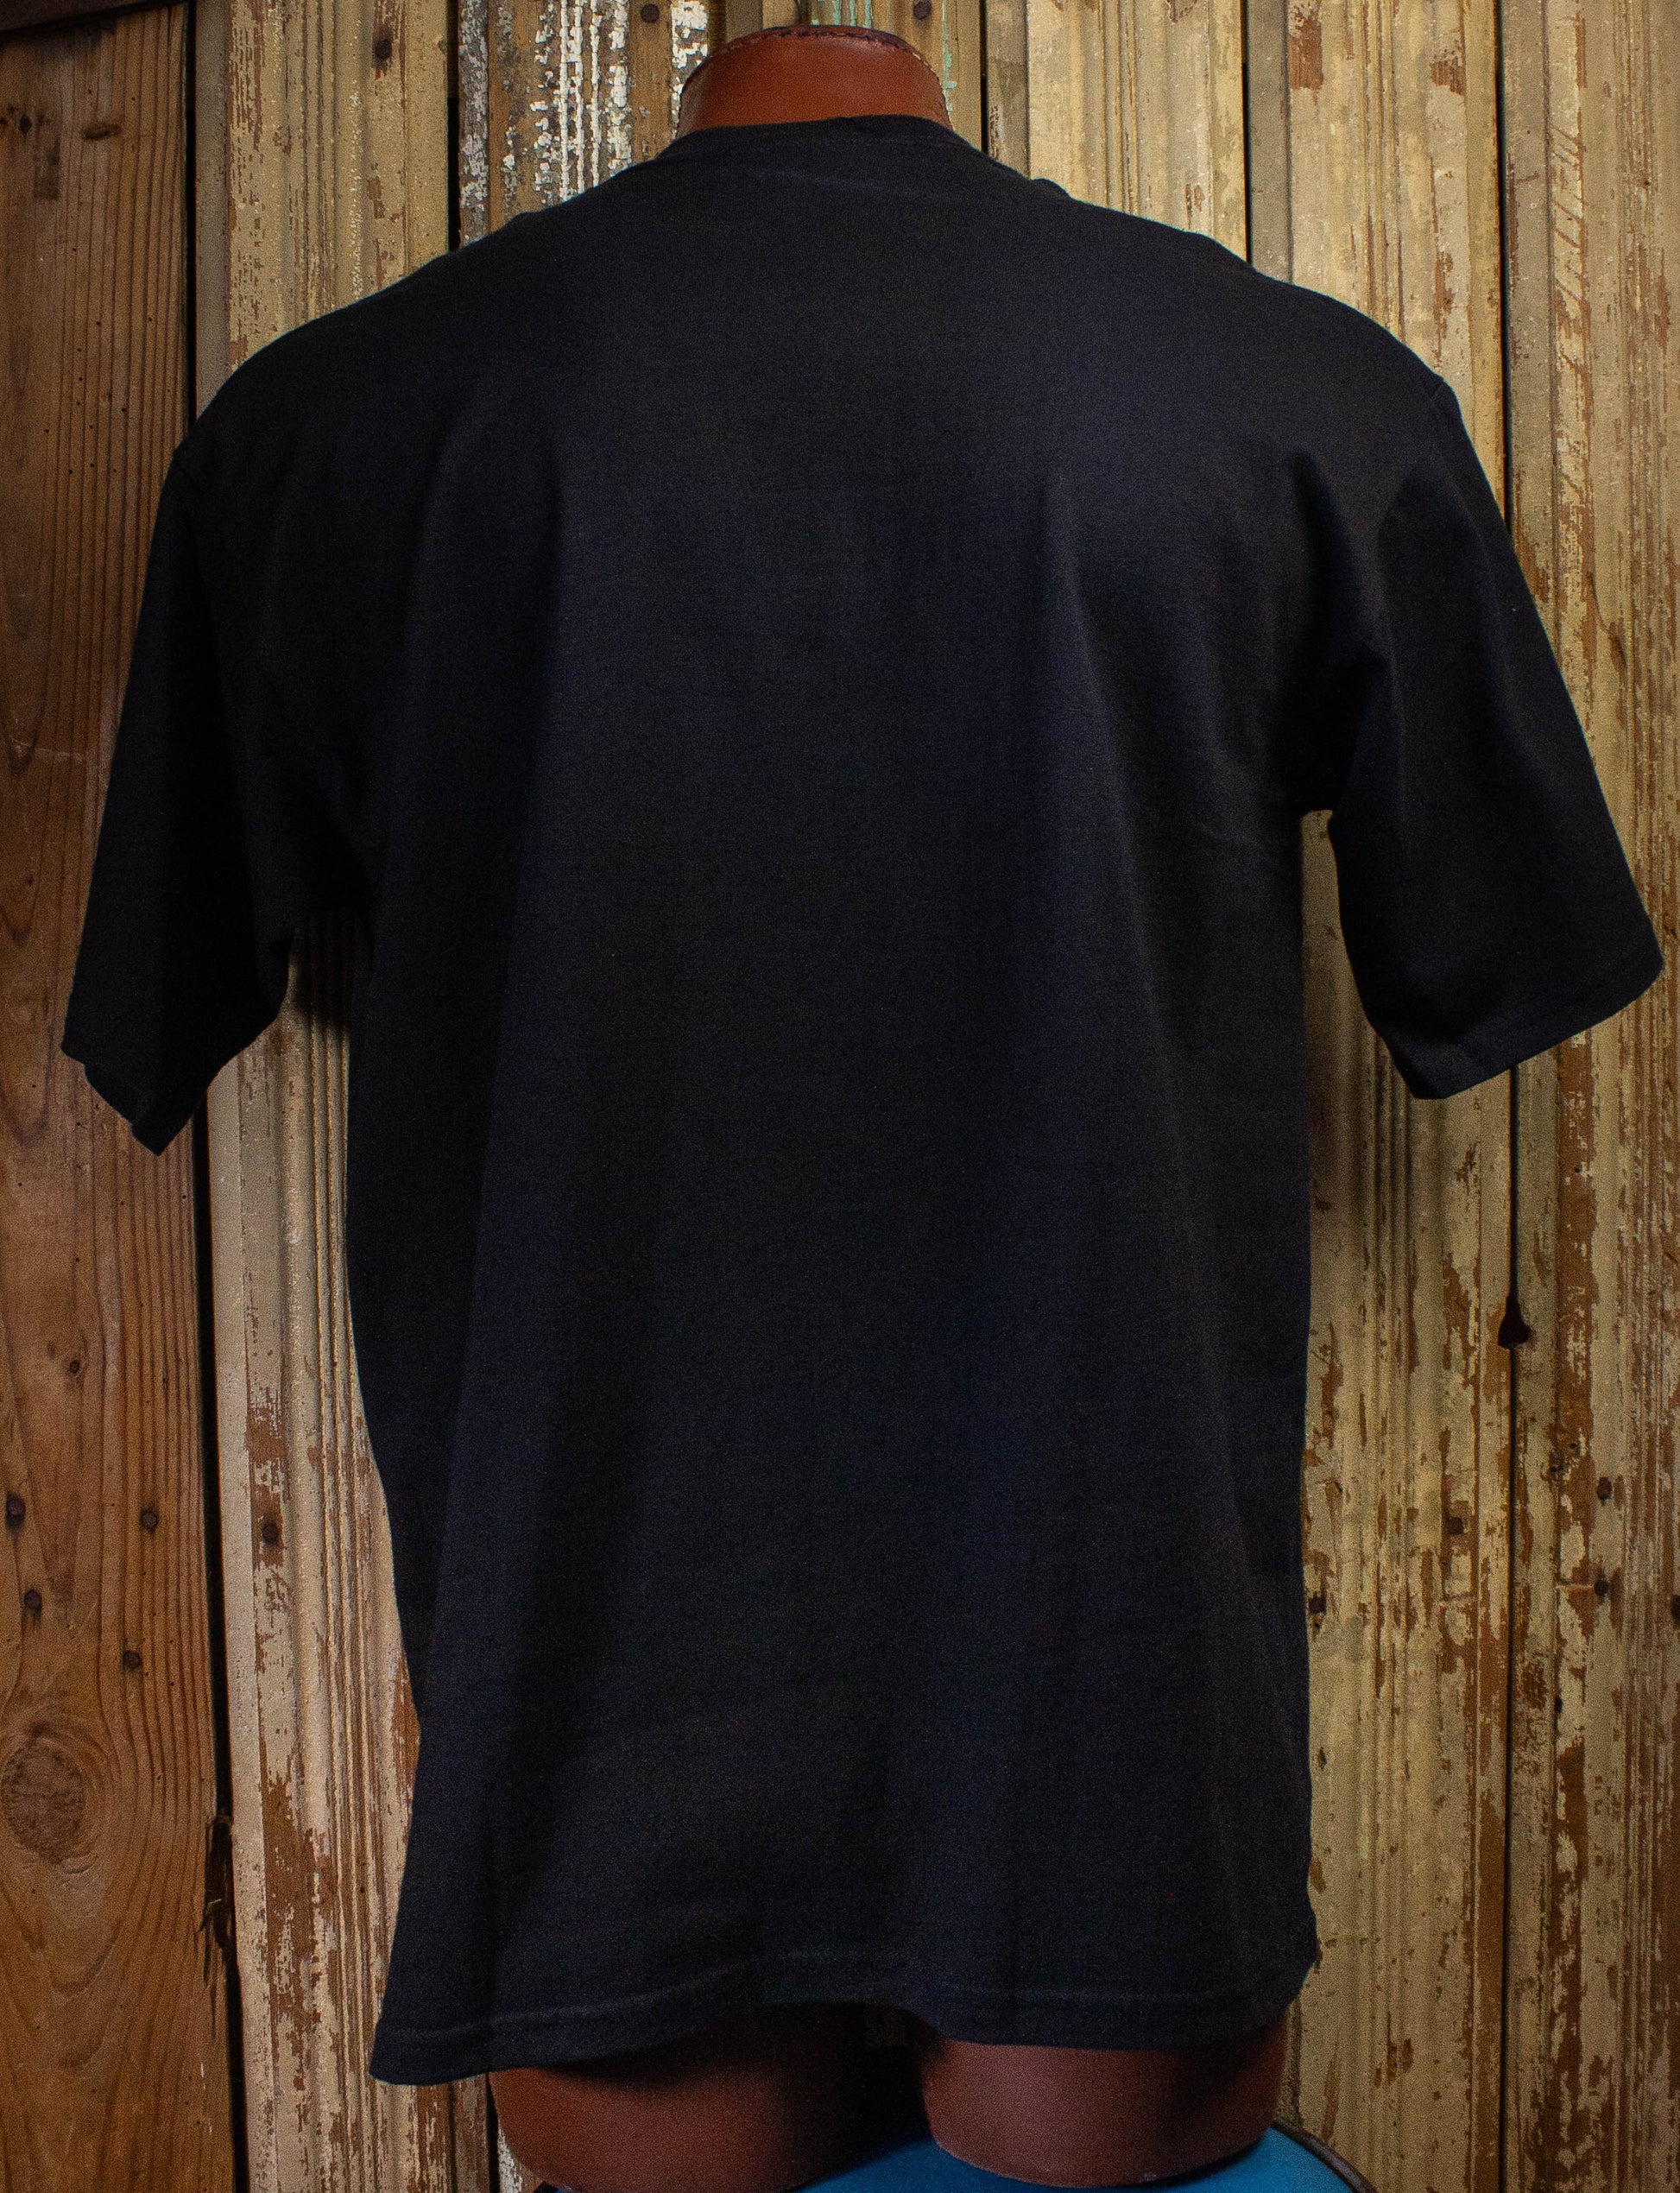 Vintage XFL Birmingham Bolts Graphic T Shirt 2001 Black XL